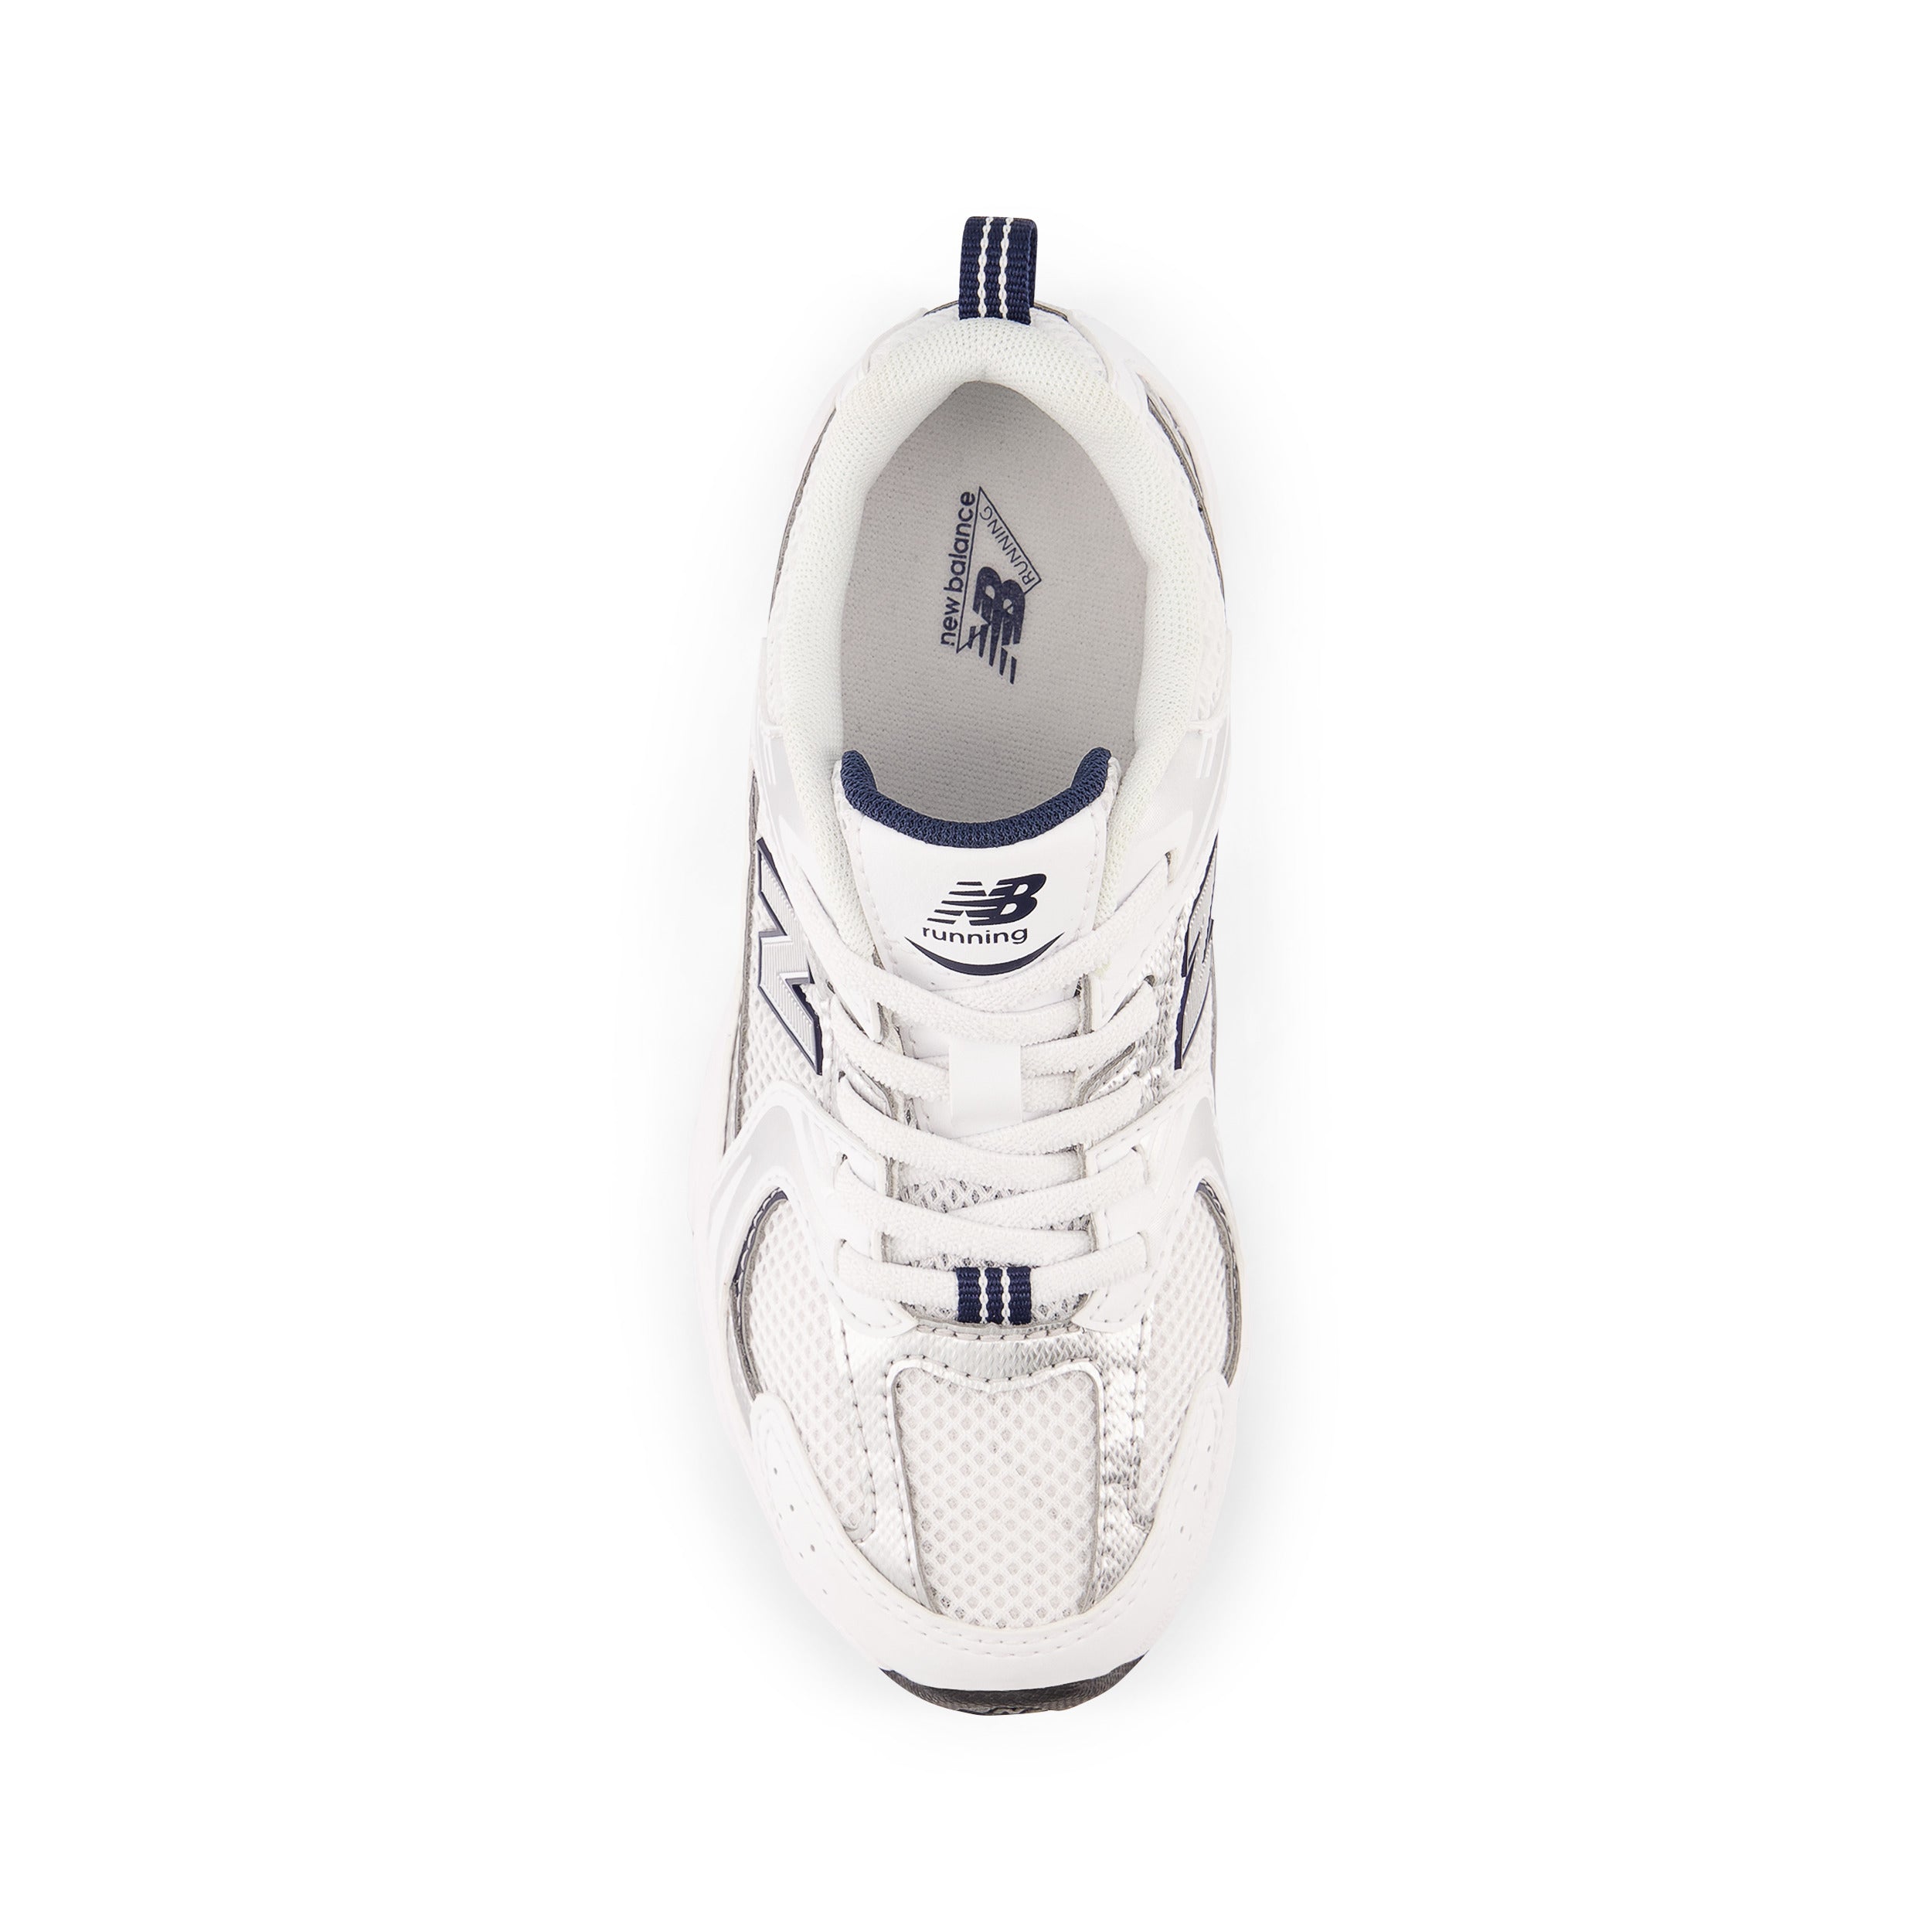 NEW BALANCE Sneakers Bambino Unisex 530-White Silver